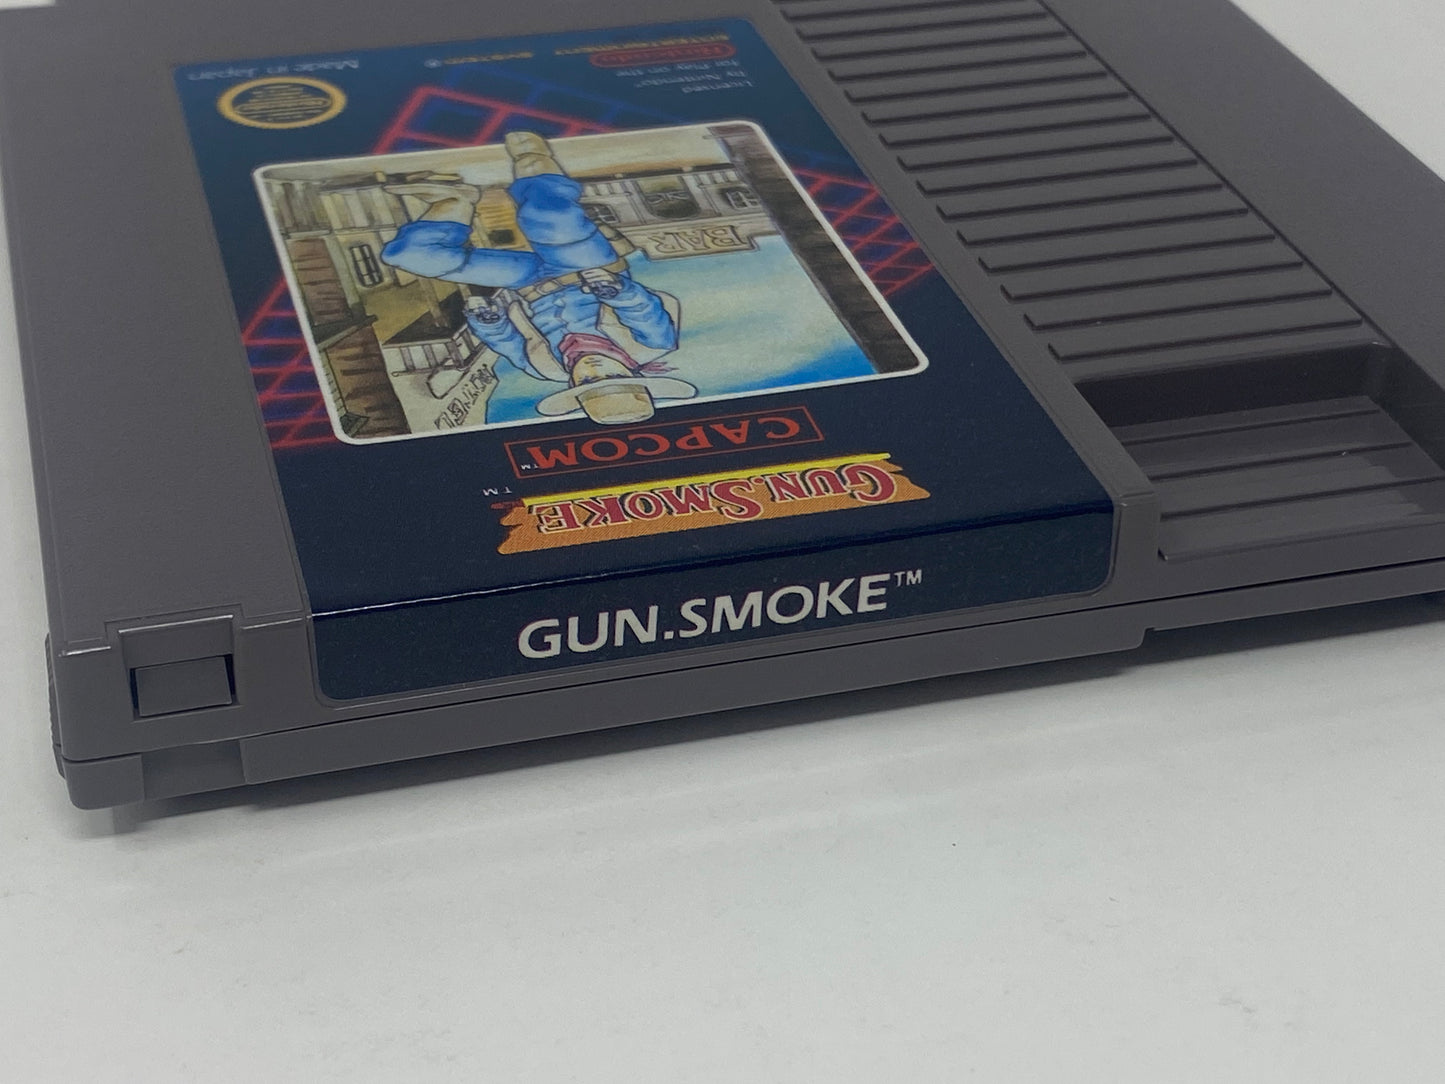 NES Nintendo - Gun.Smoke - Bar Box Variant - CIB Complete in Box w/ Instructions